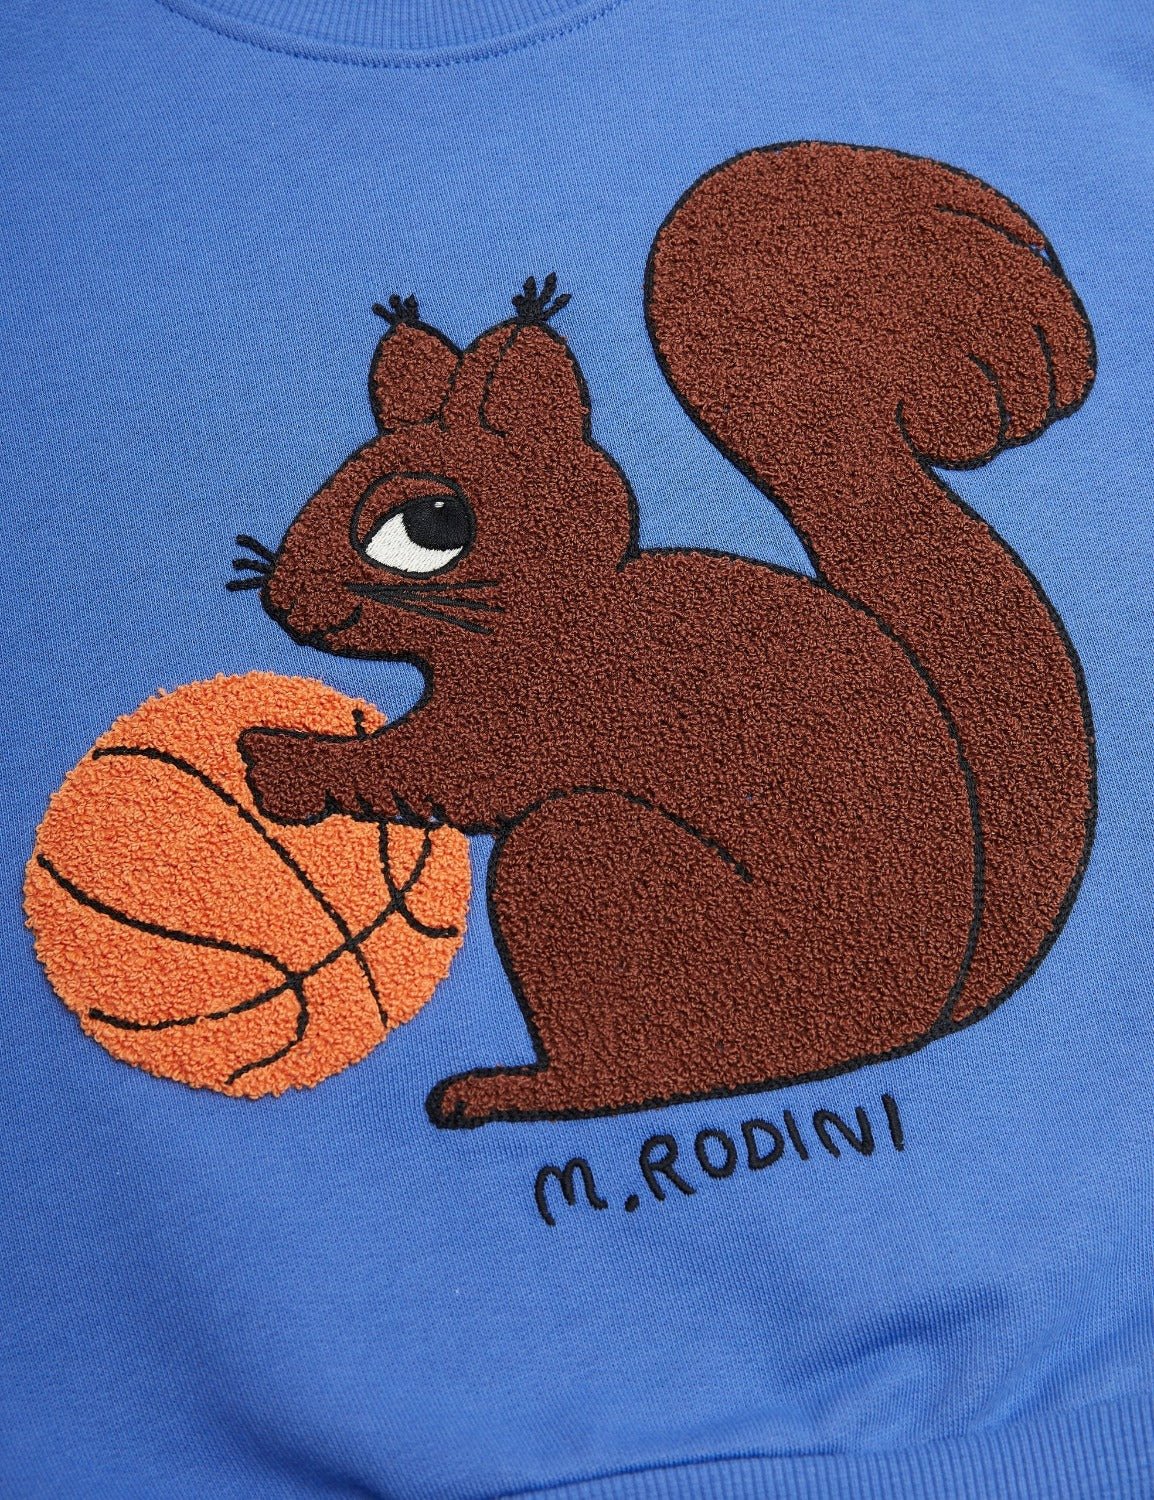 Squirrel Embroidered Sweatshirt by Mini Rodini - Petite Belle